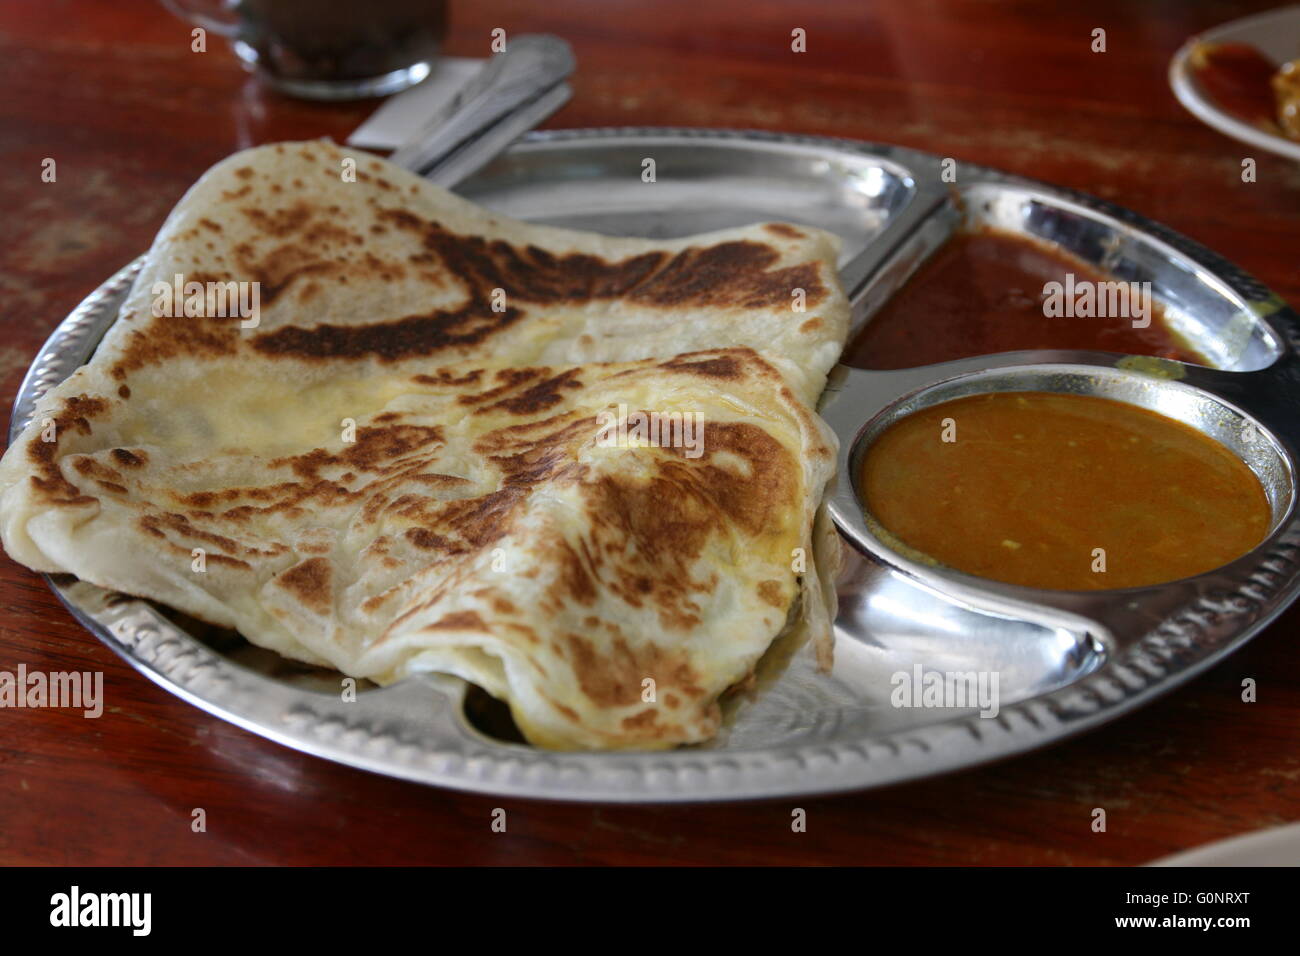 Malaysian cuisine: Indian food, Roti Canai Stock Photo